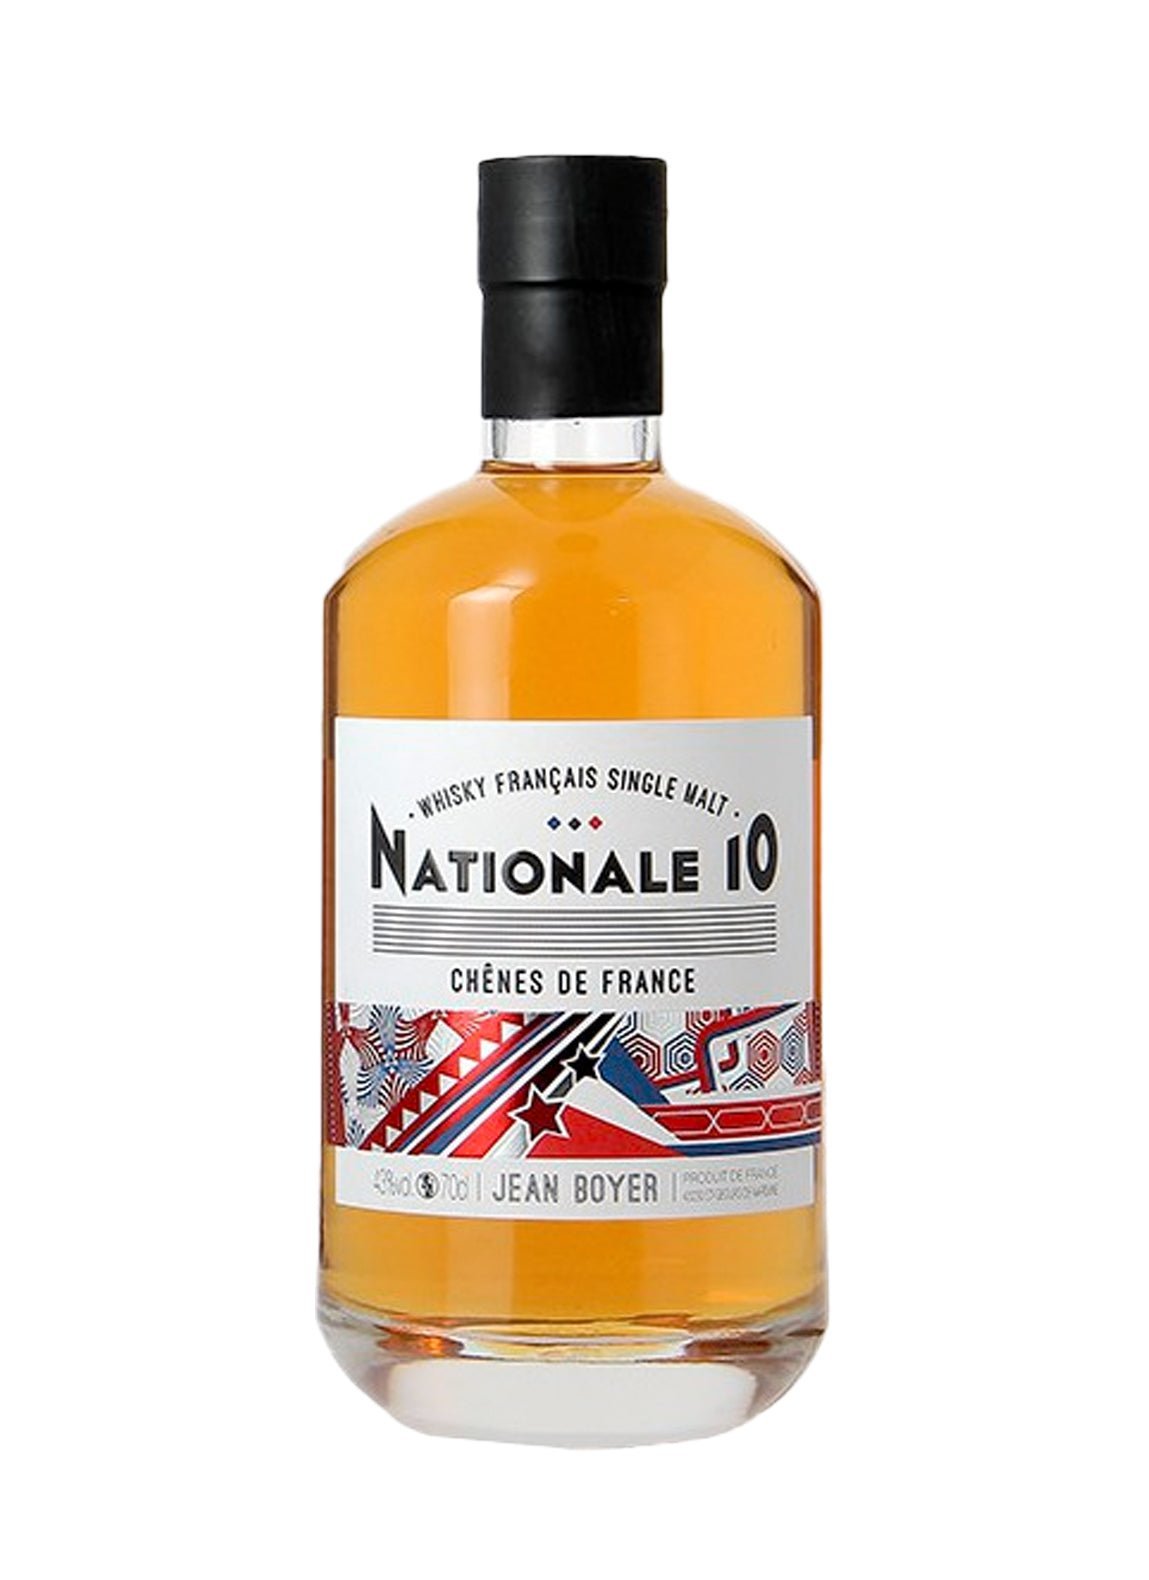 Jean Boyer Nationale 10 Chenes De France Single Malt Whisky 43% 700ml | Whiskey | Shop online at Spirits of France